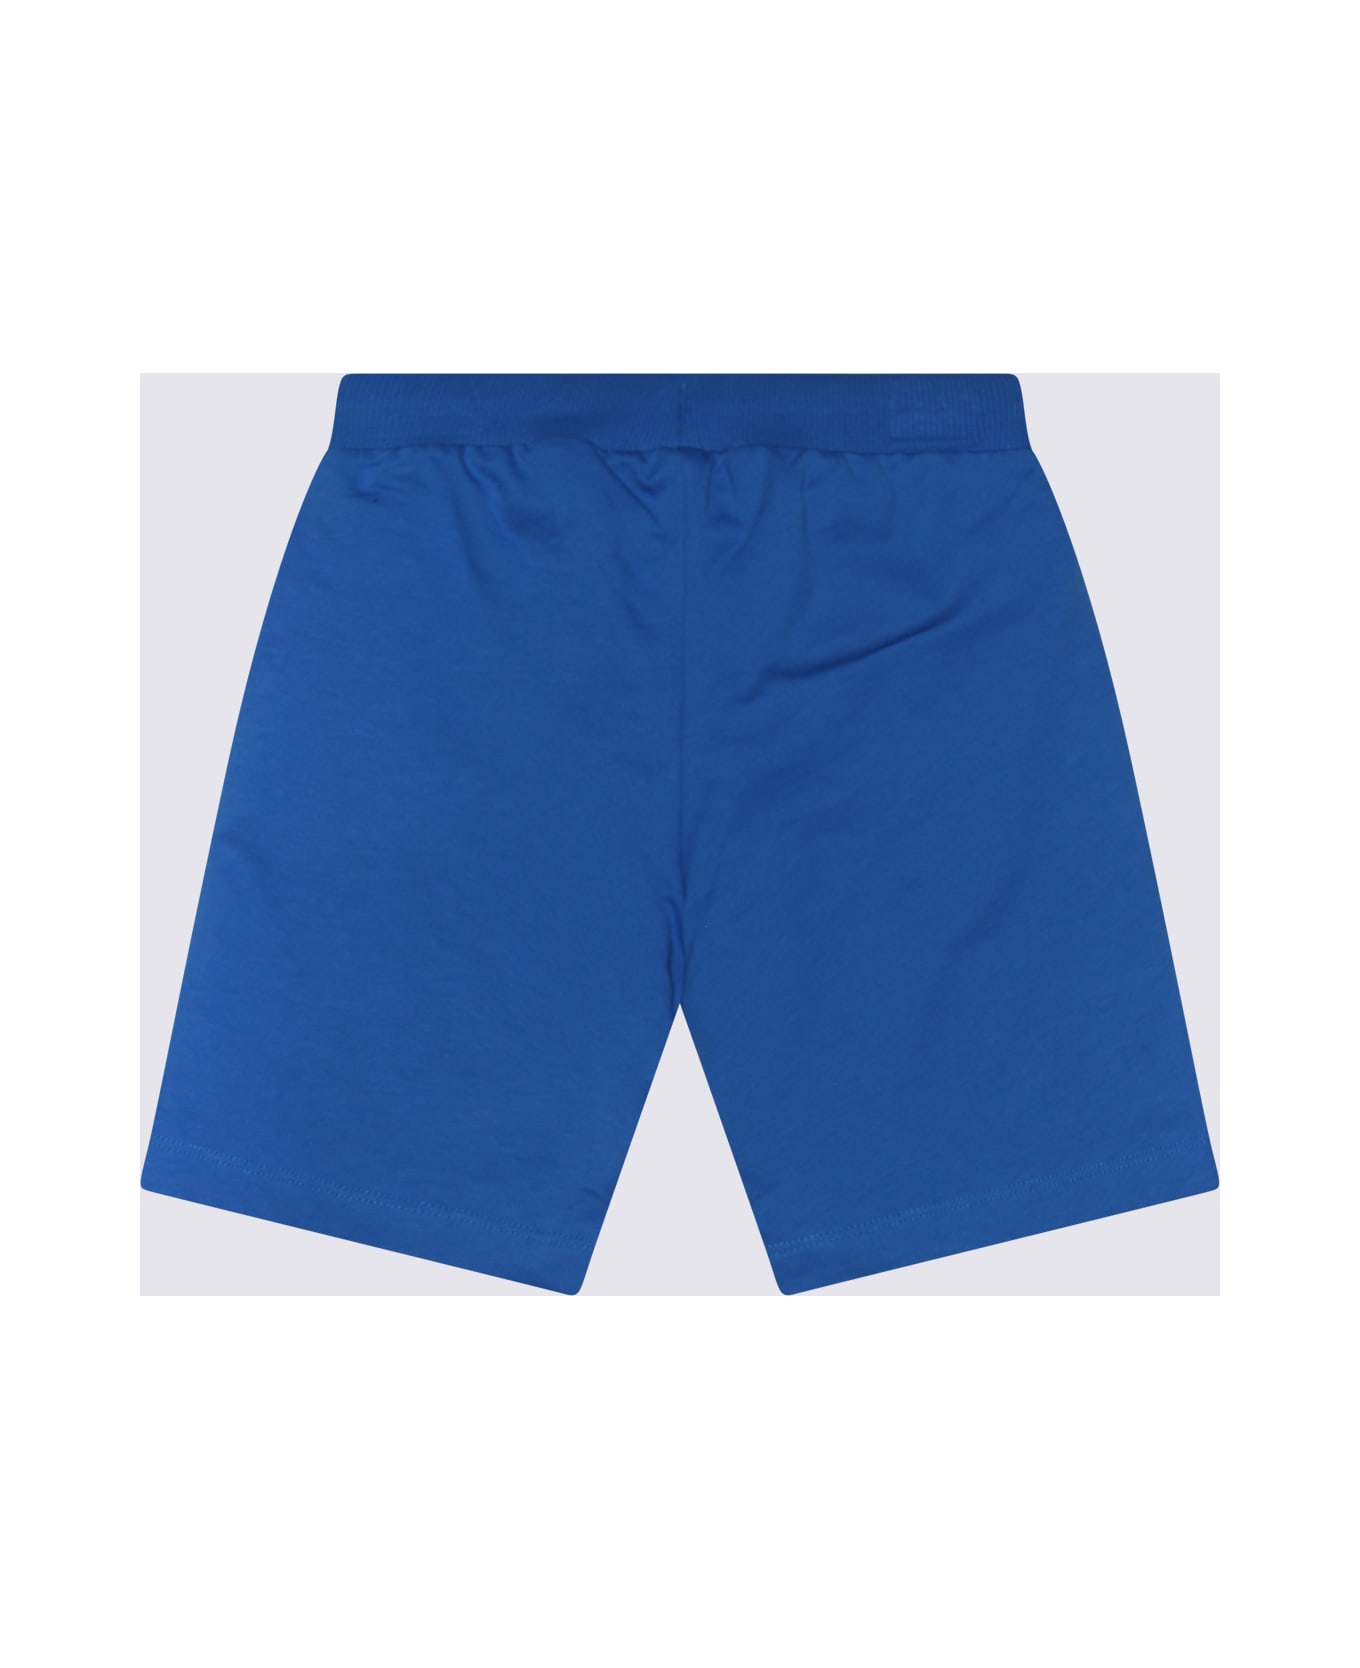 Moschino Blue Cotton Shorts - VICTORIA BLUE